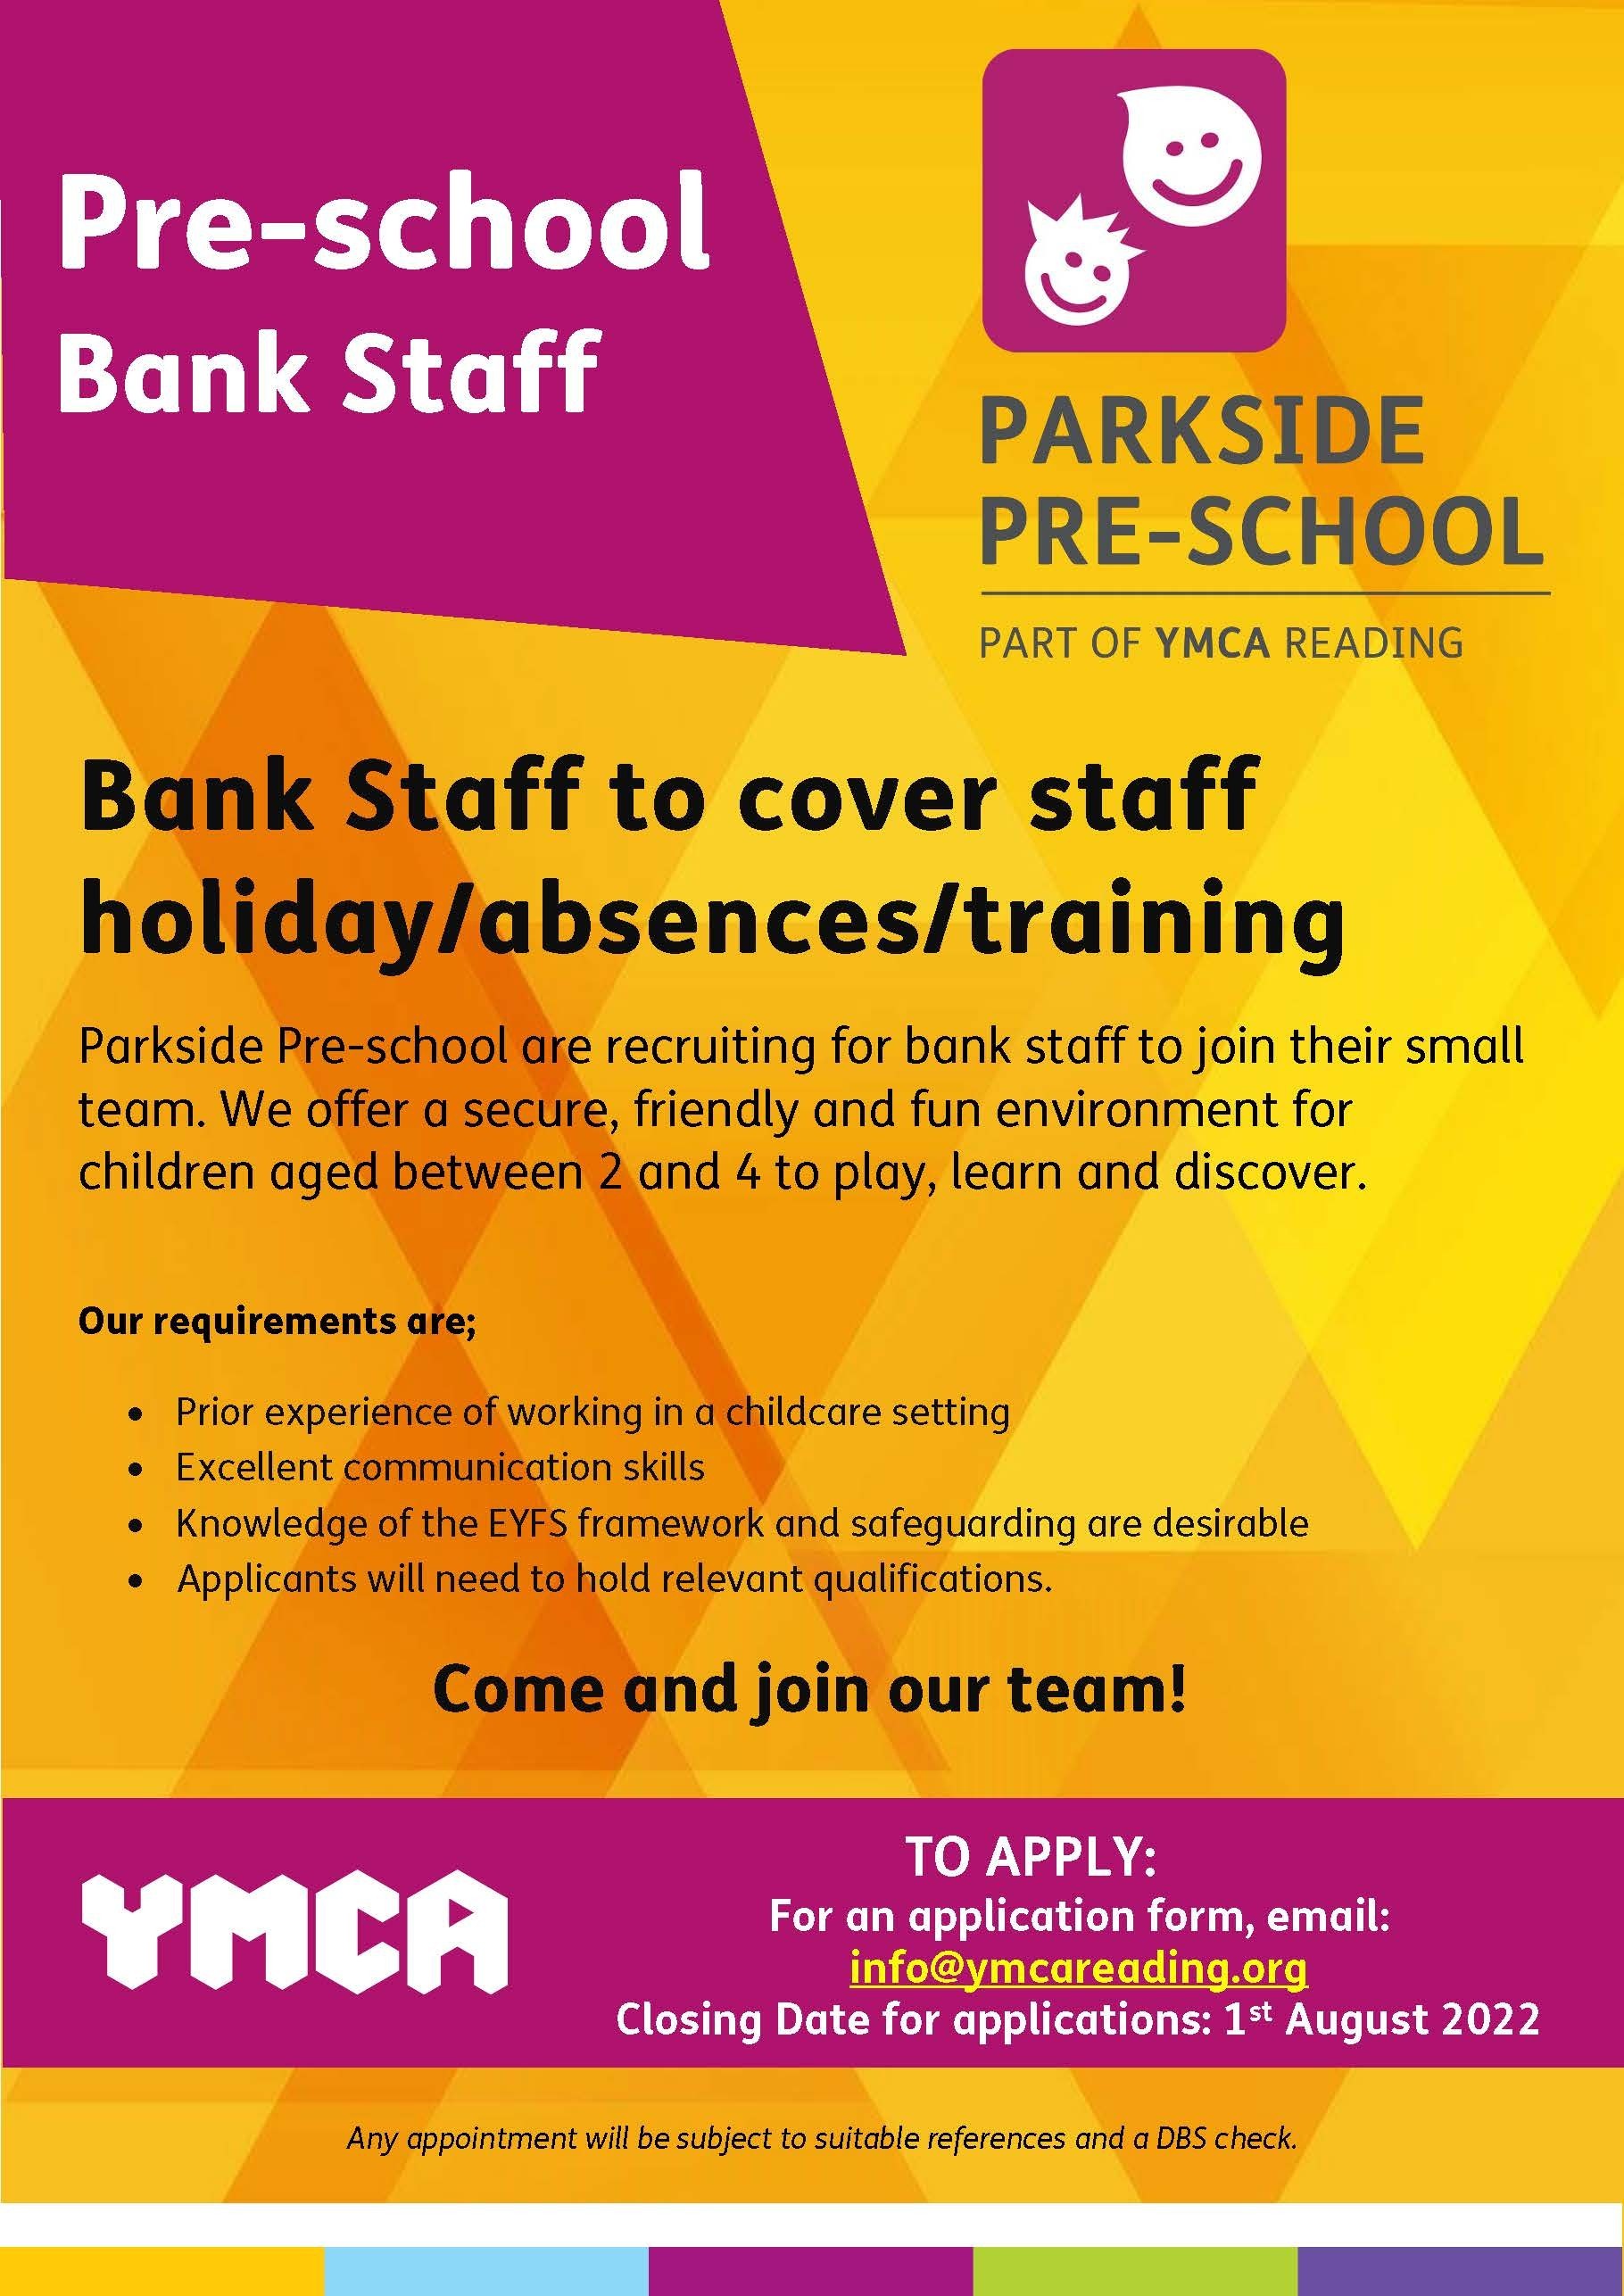 ParkSide Pre-school, Bank Staff